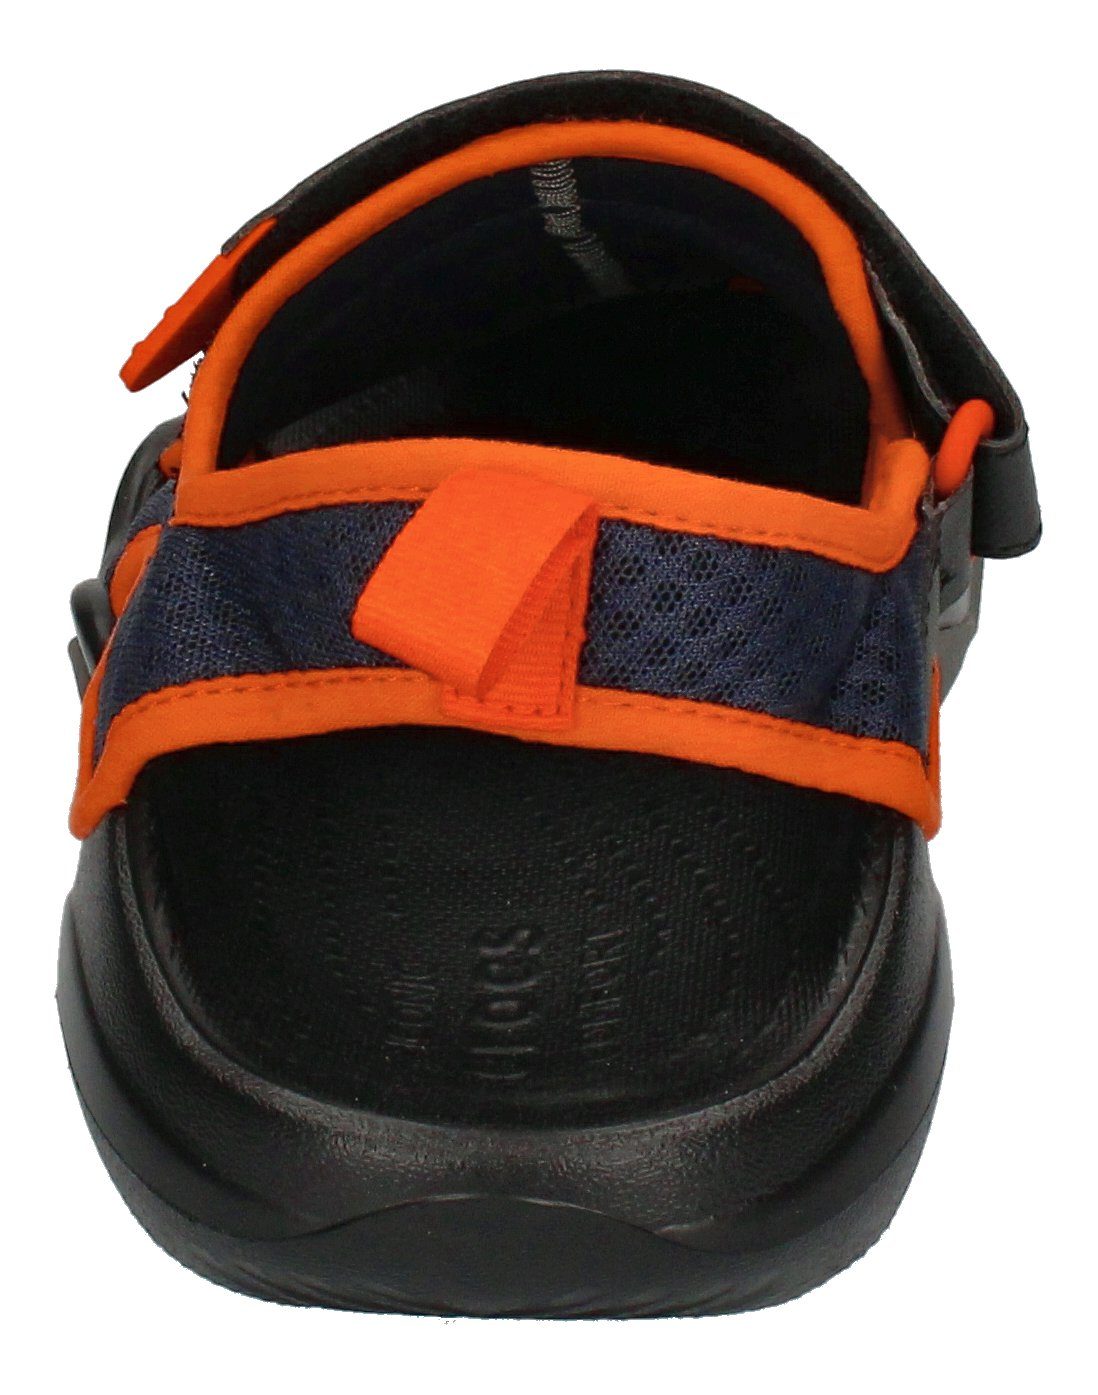 Schuhe Sandalen Crocs SWIFTWATER MESH DECK SANDAL Plateausandale Blau Navy Tangerine 4v9